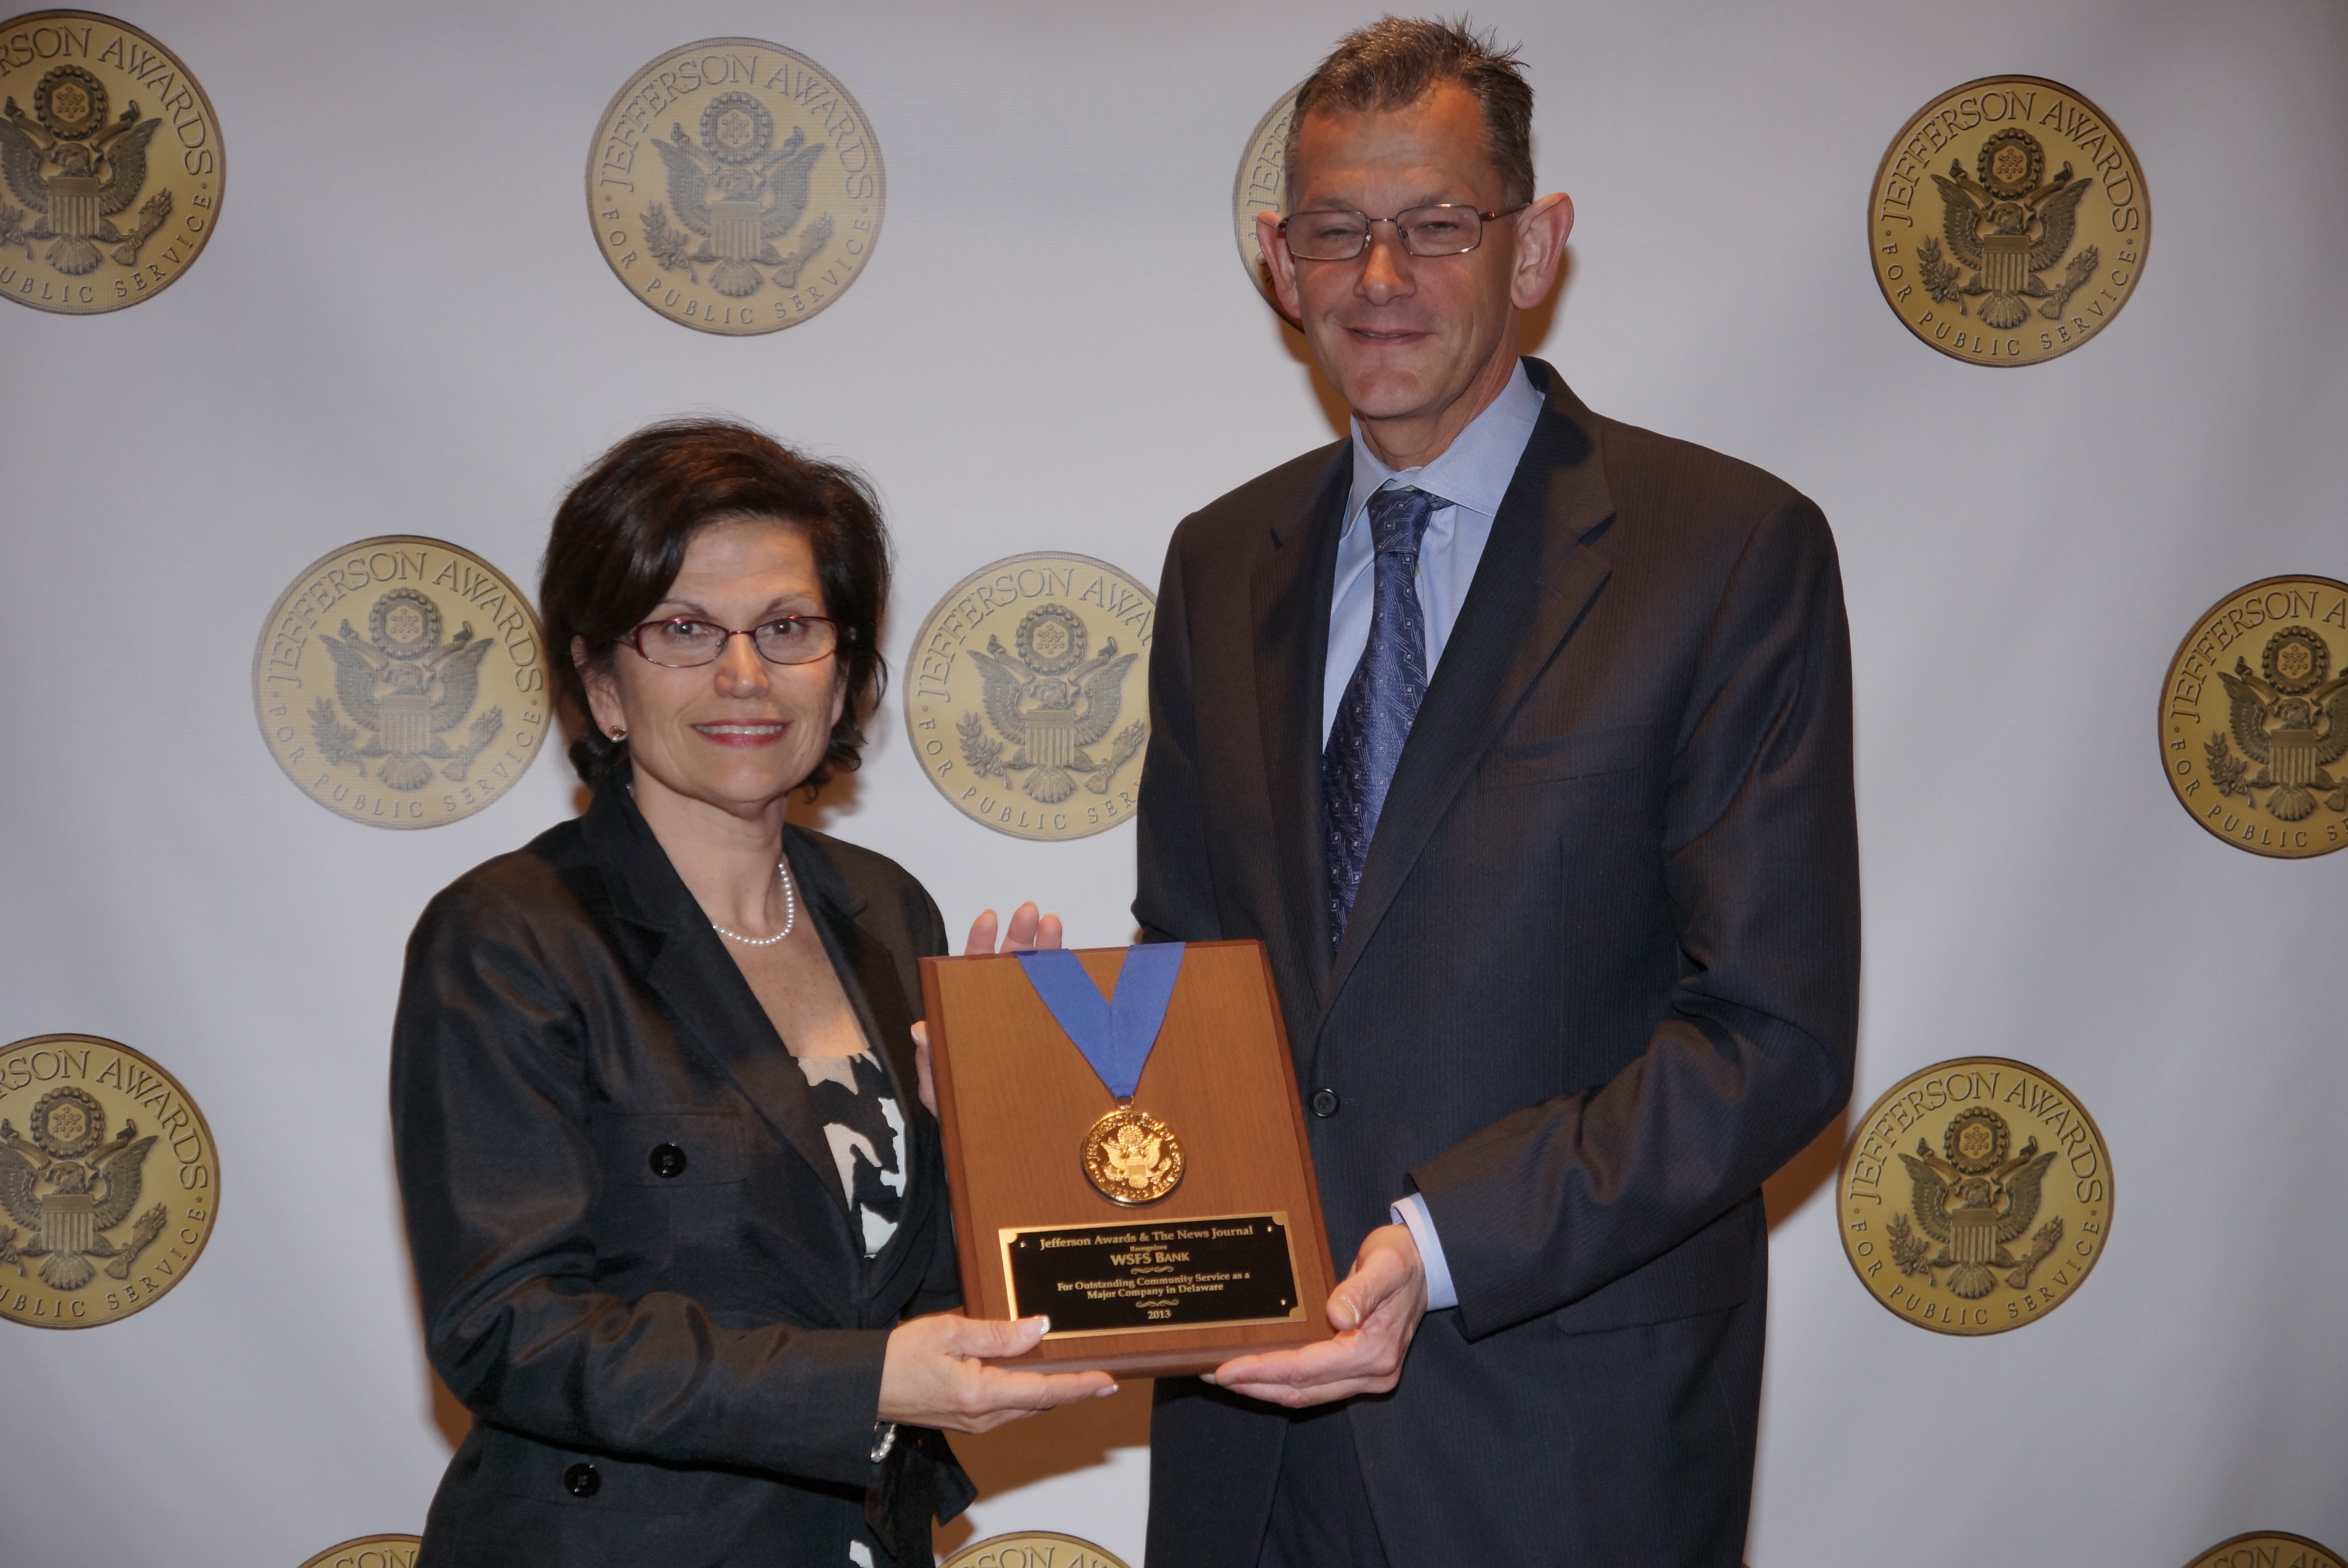 WSFS Financial Corporation Accepts 2013 Jefferson Award